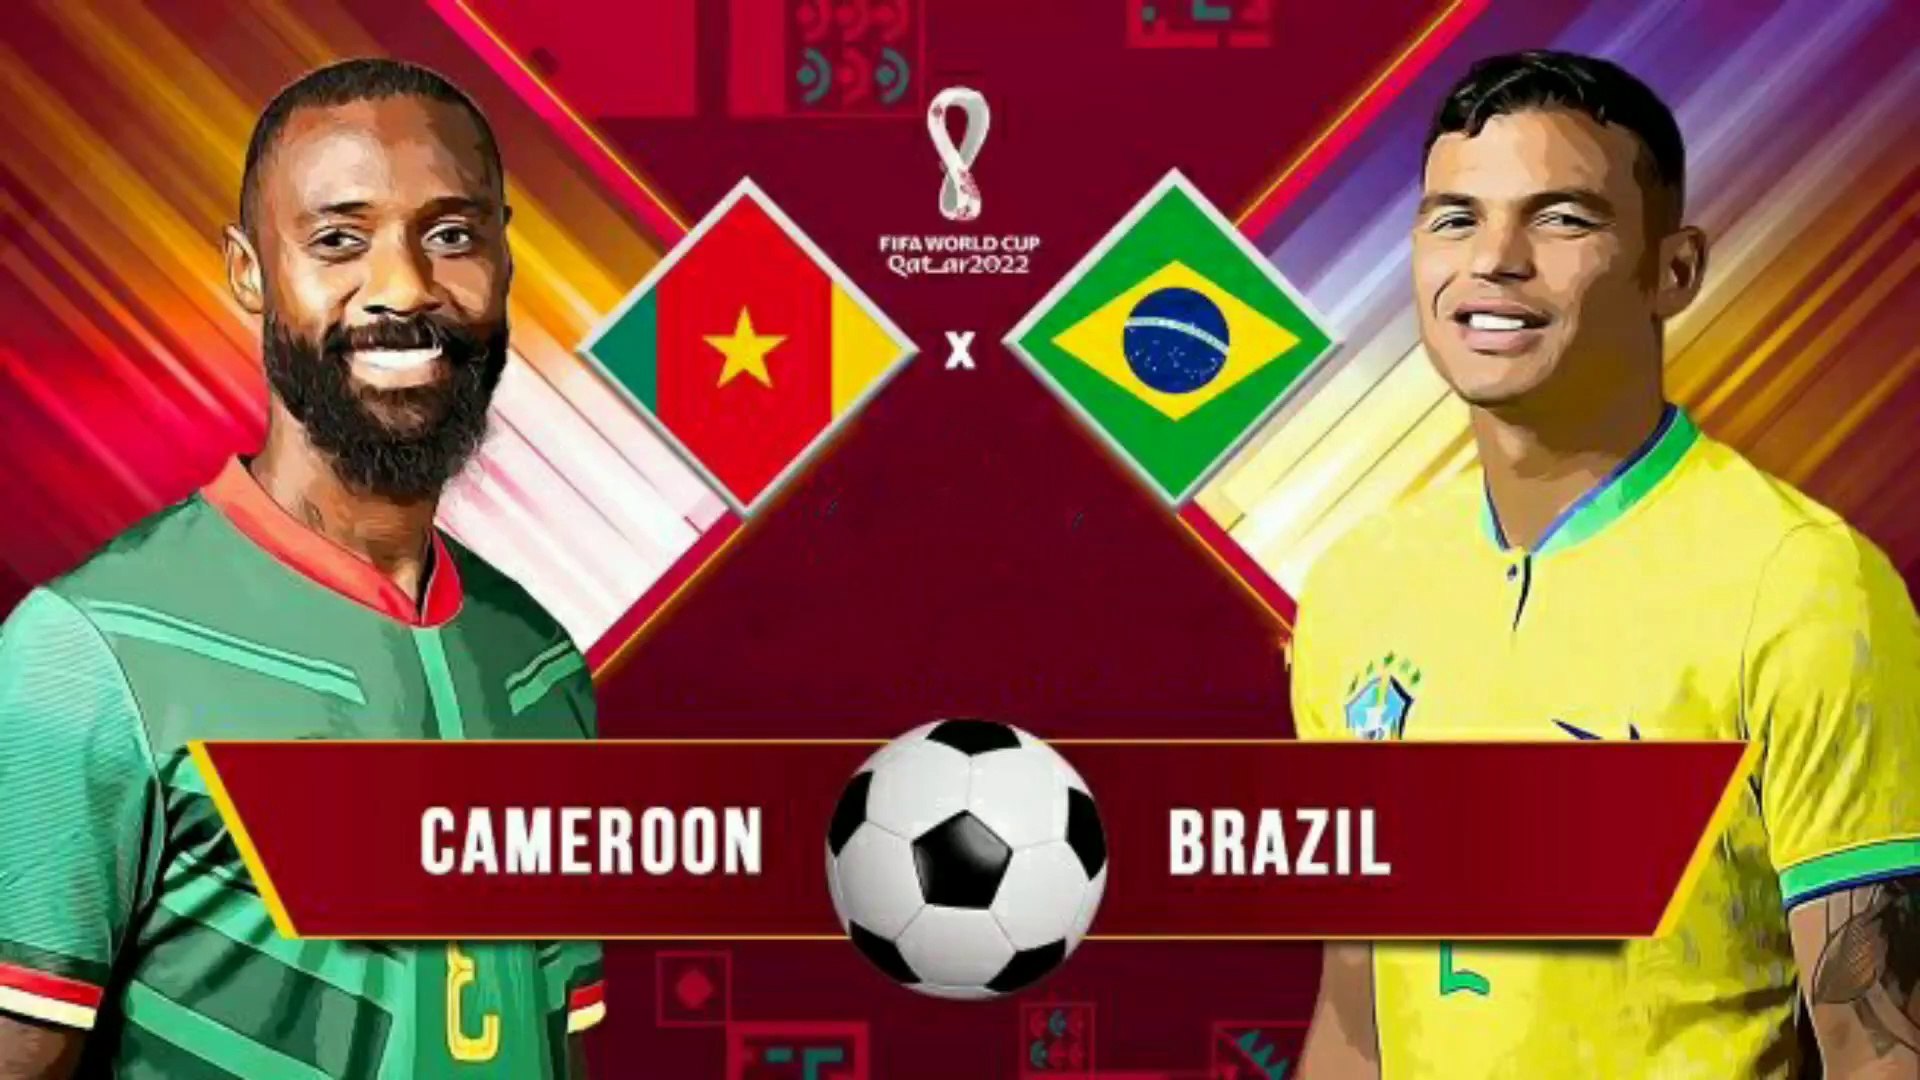 Cameroon Vs Brazil, Match Highlights